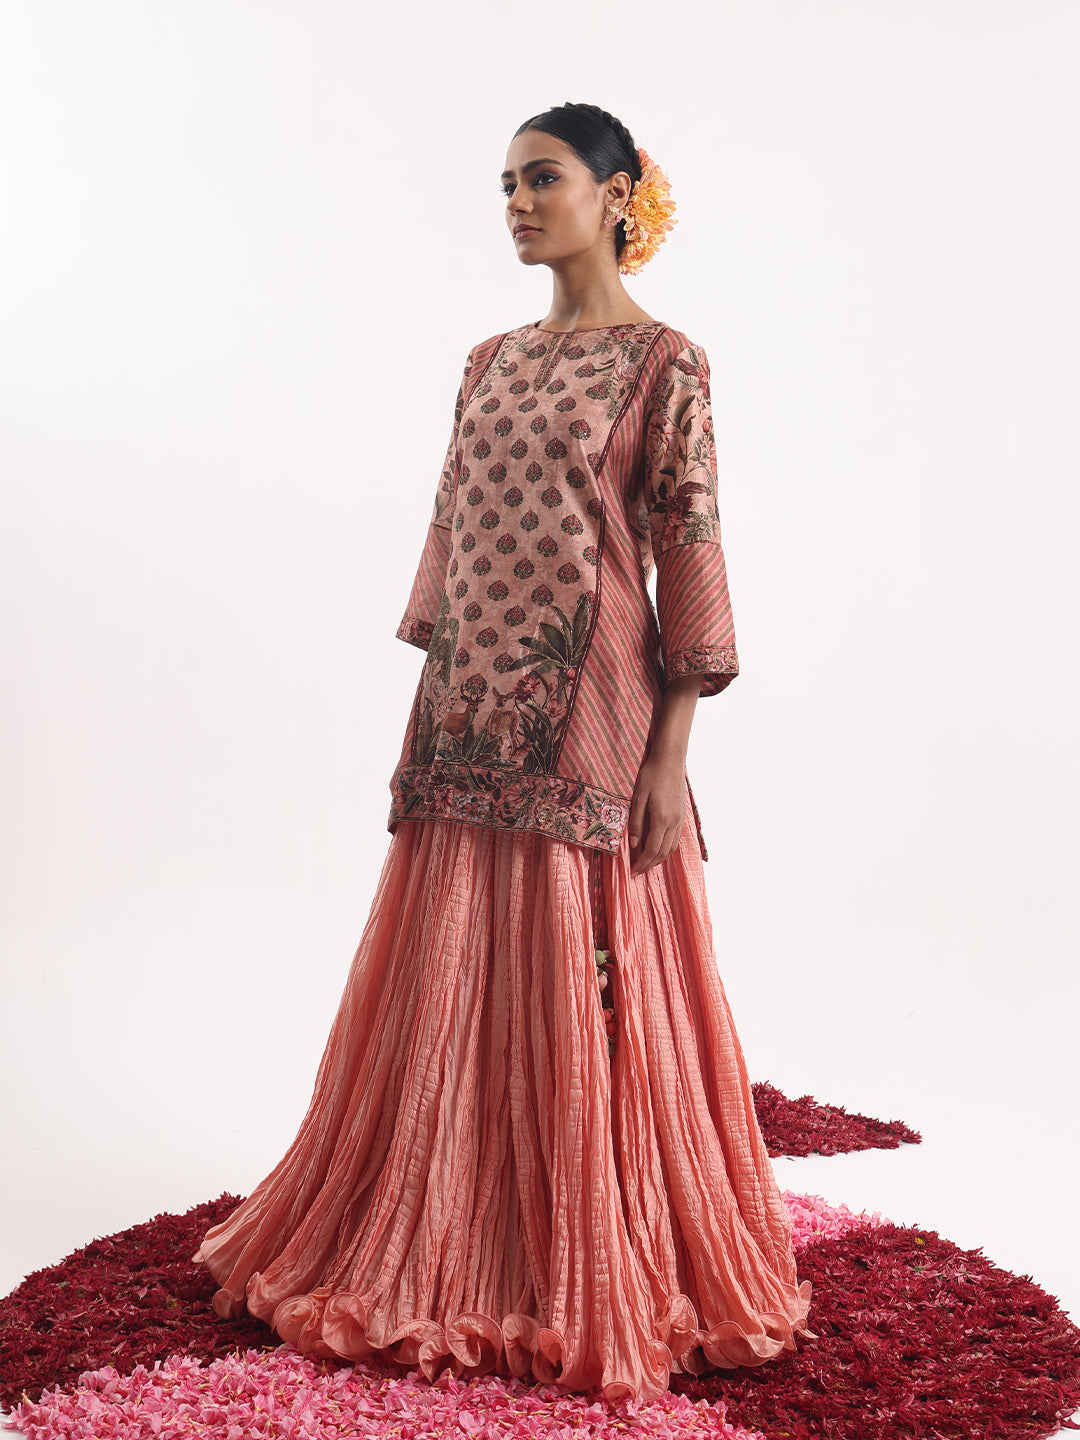 Long skirt paired with a digitally printed short kurta.